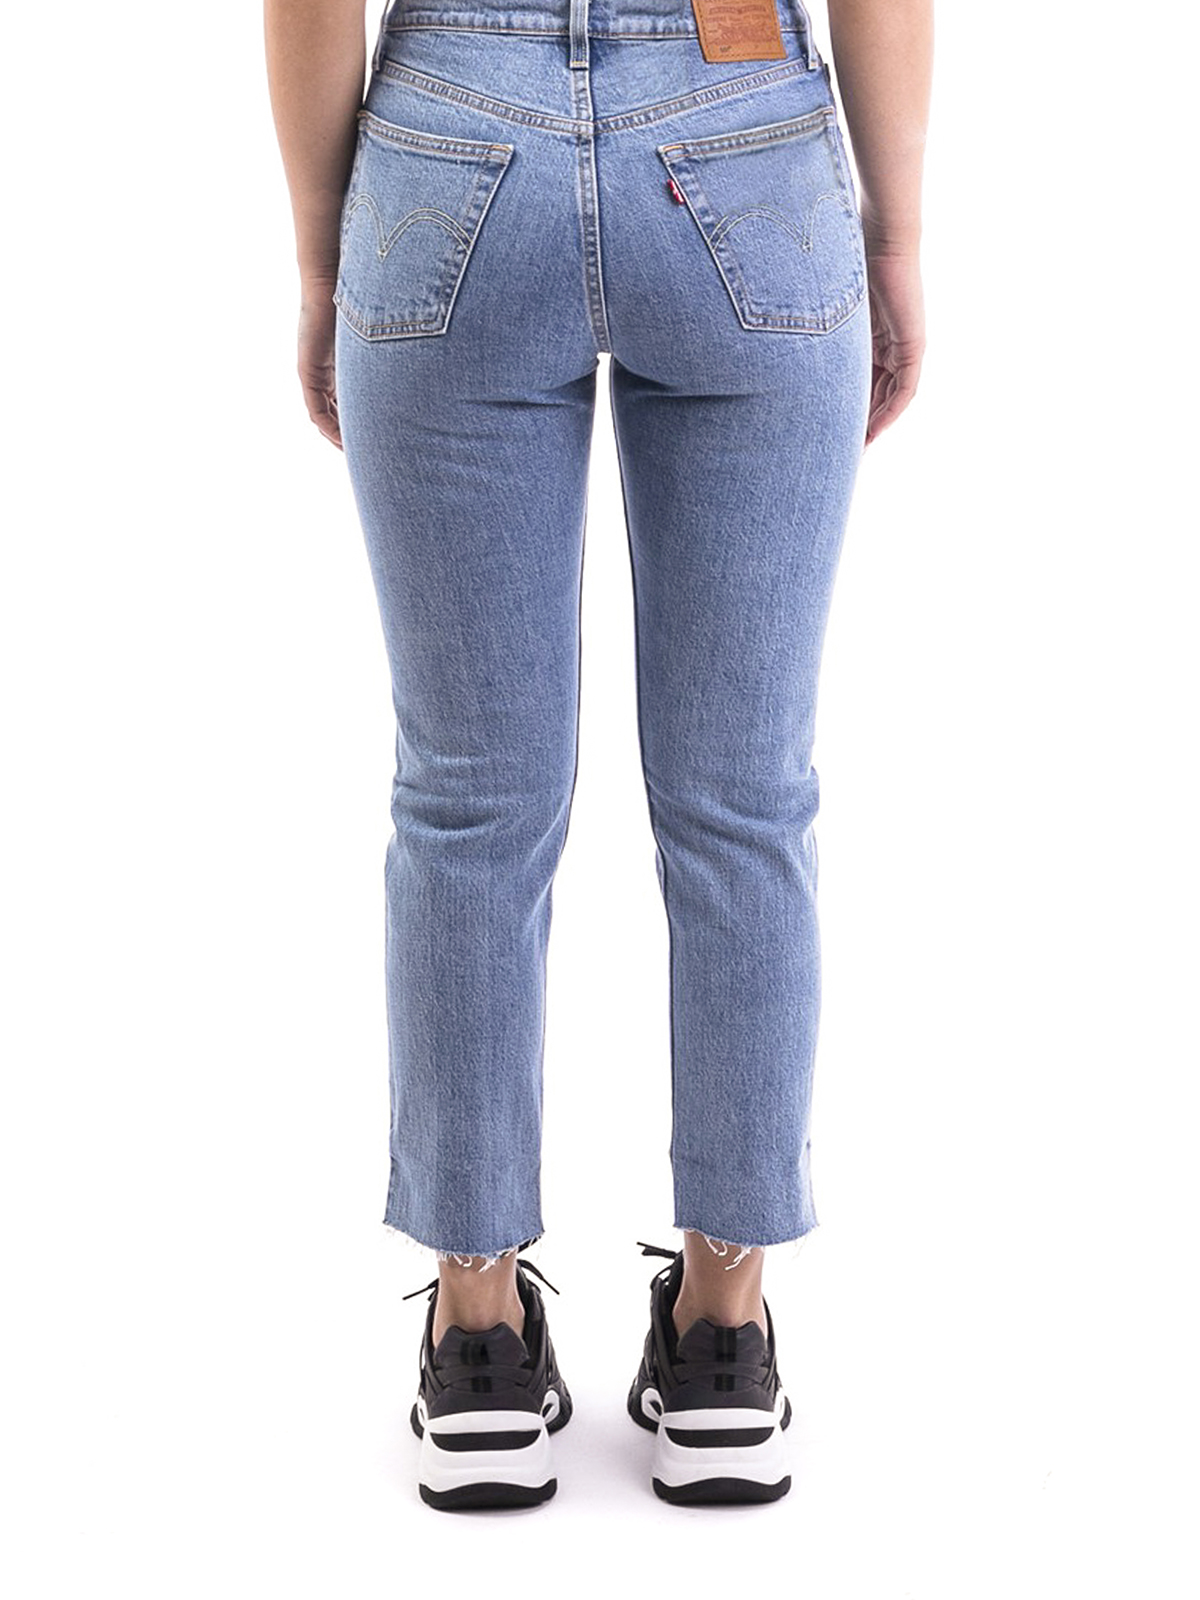 huiswerk maken Fokken vangst Straight leg jeans Levi'S - 501 Original cropped faded jeans - 36200009626